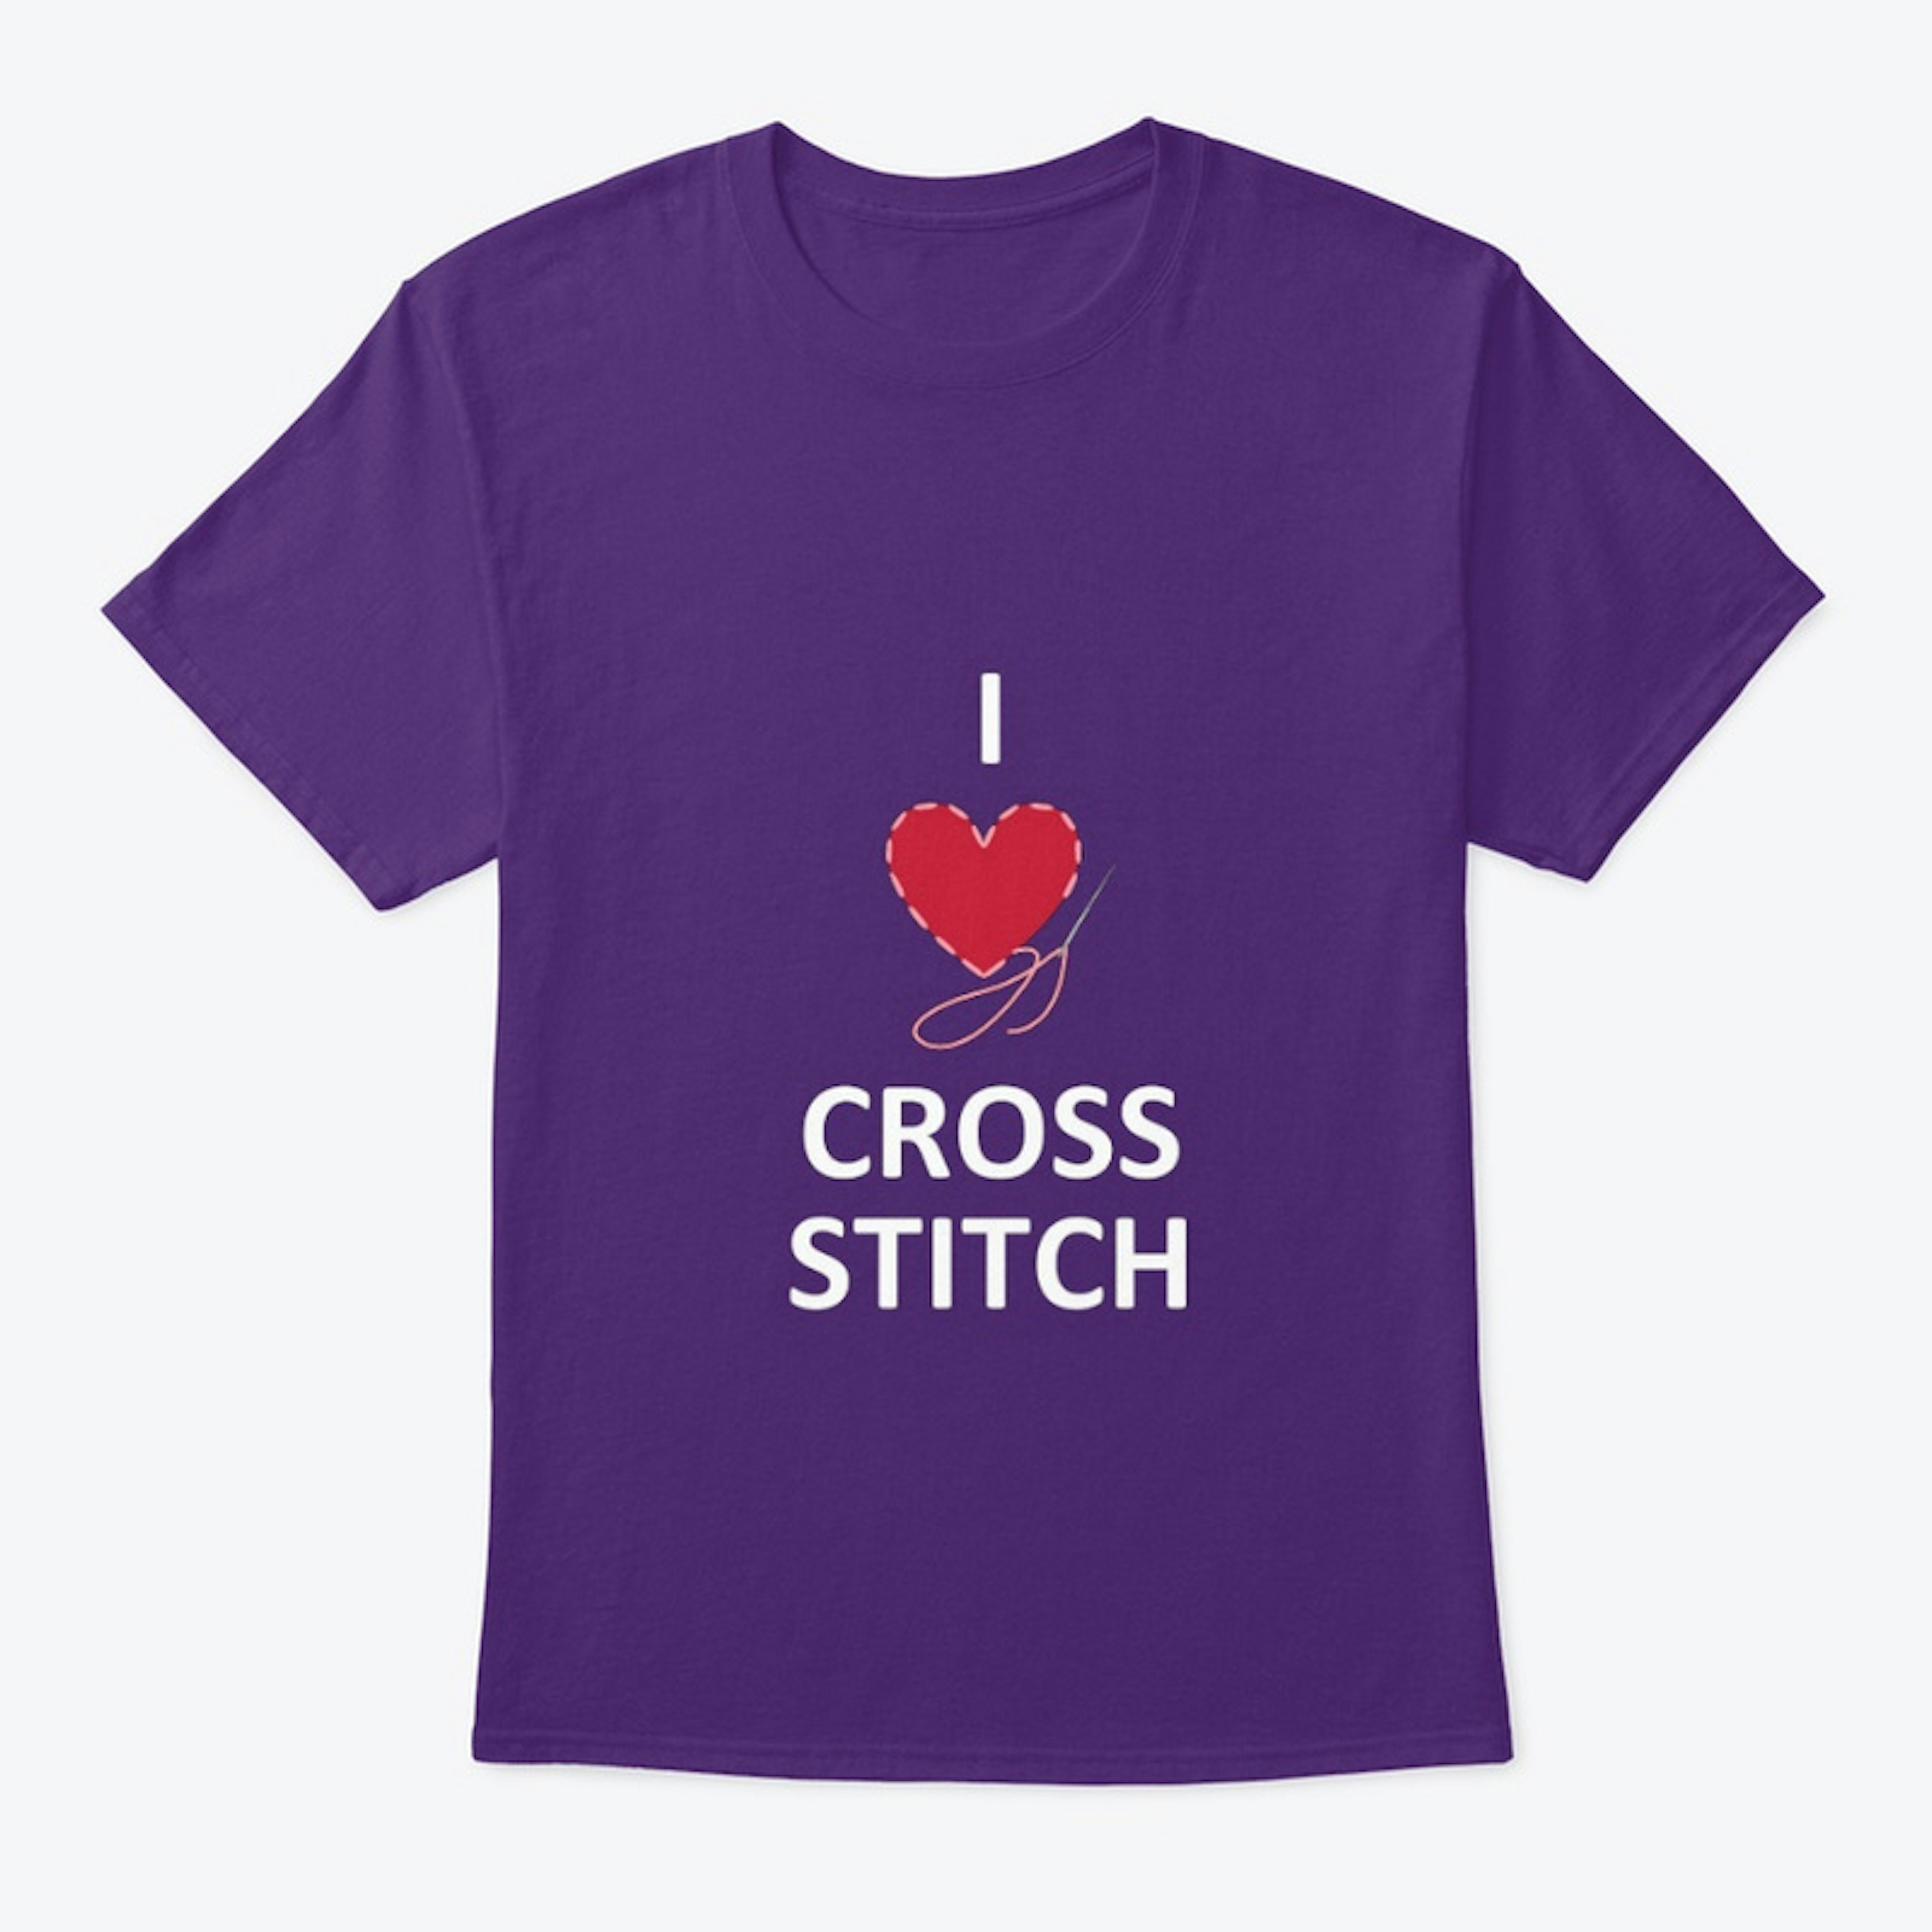 I Love Cross Stitch (nothing on back)